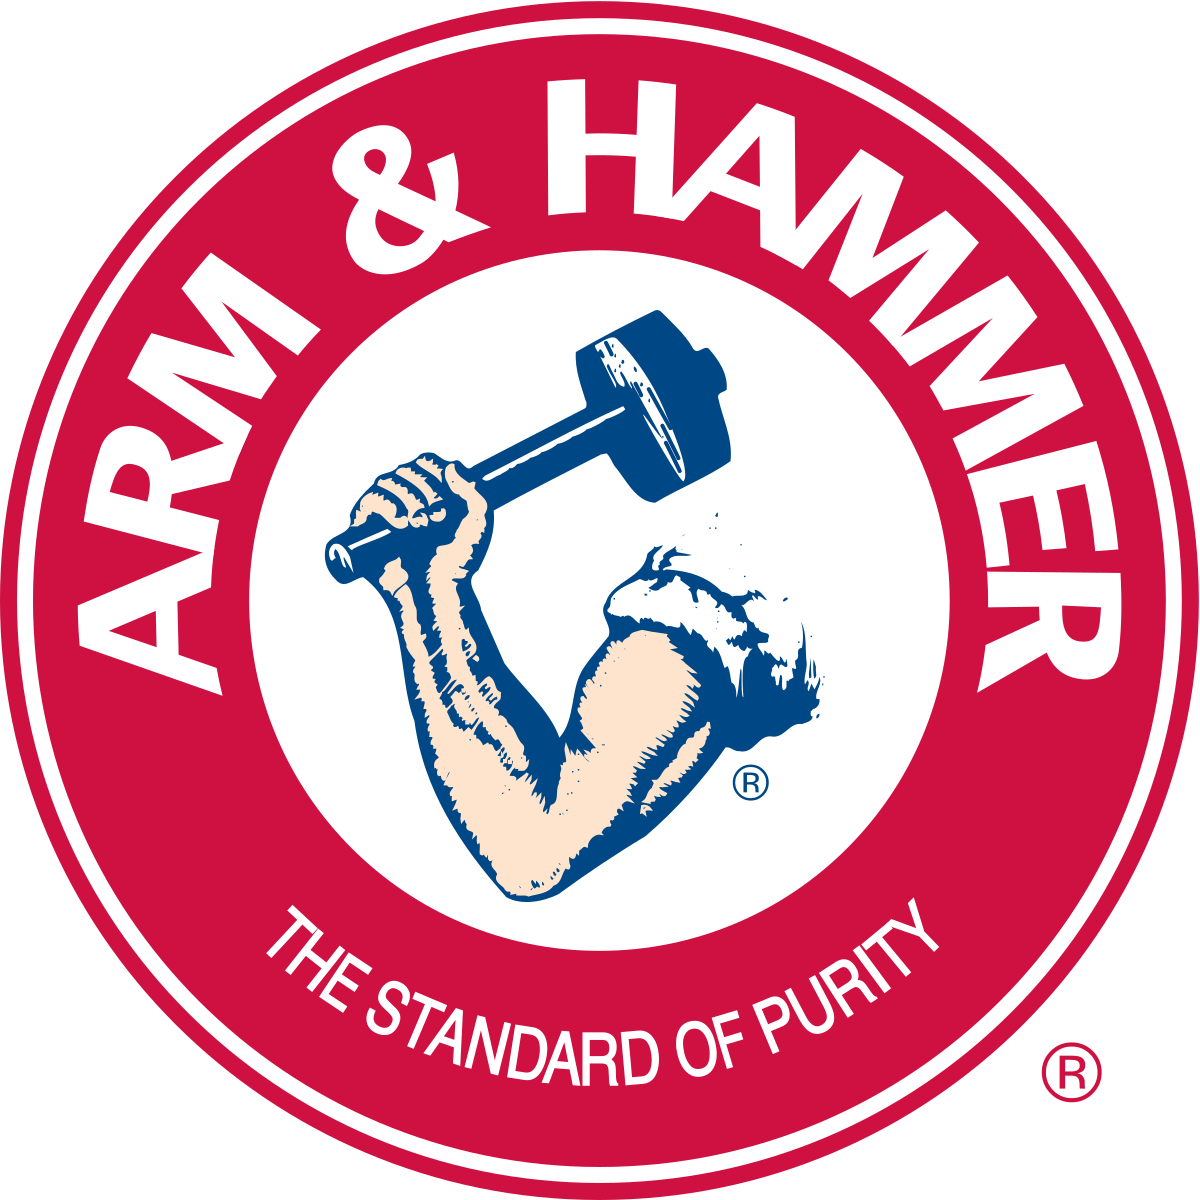 ارم اند هامر arm and hammer